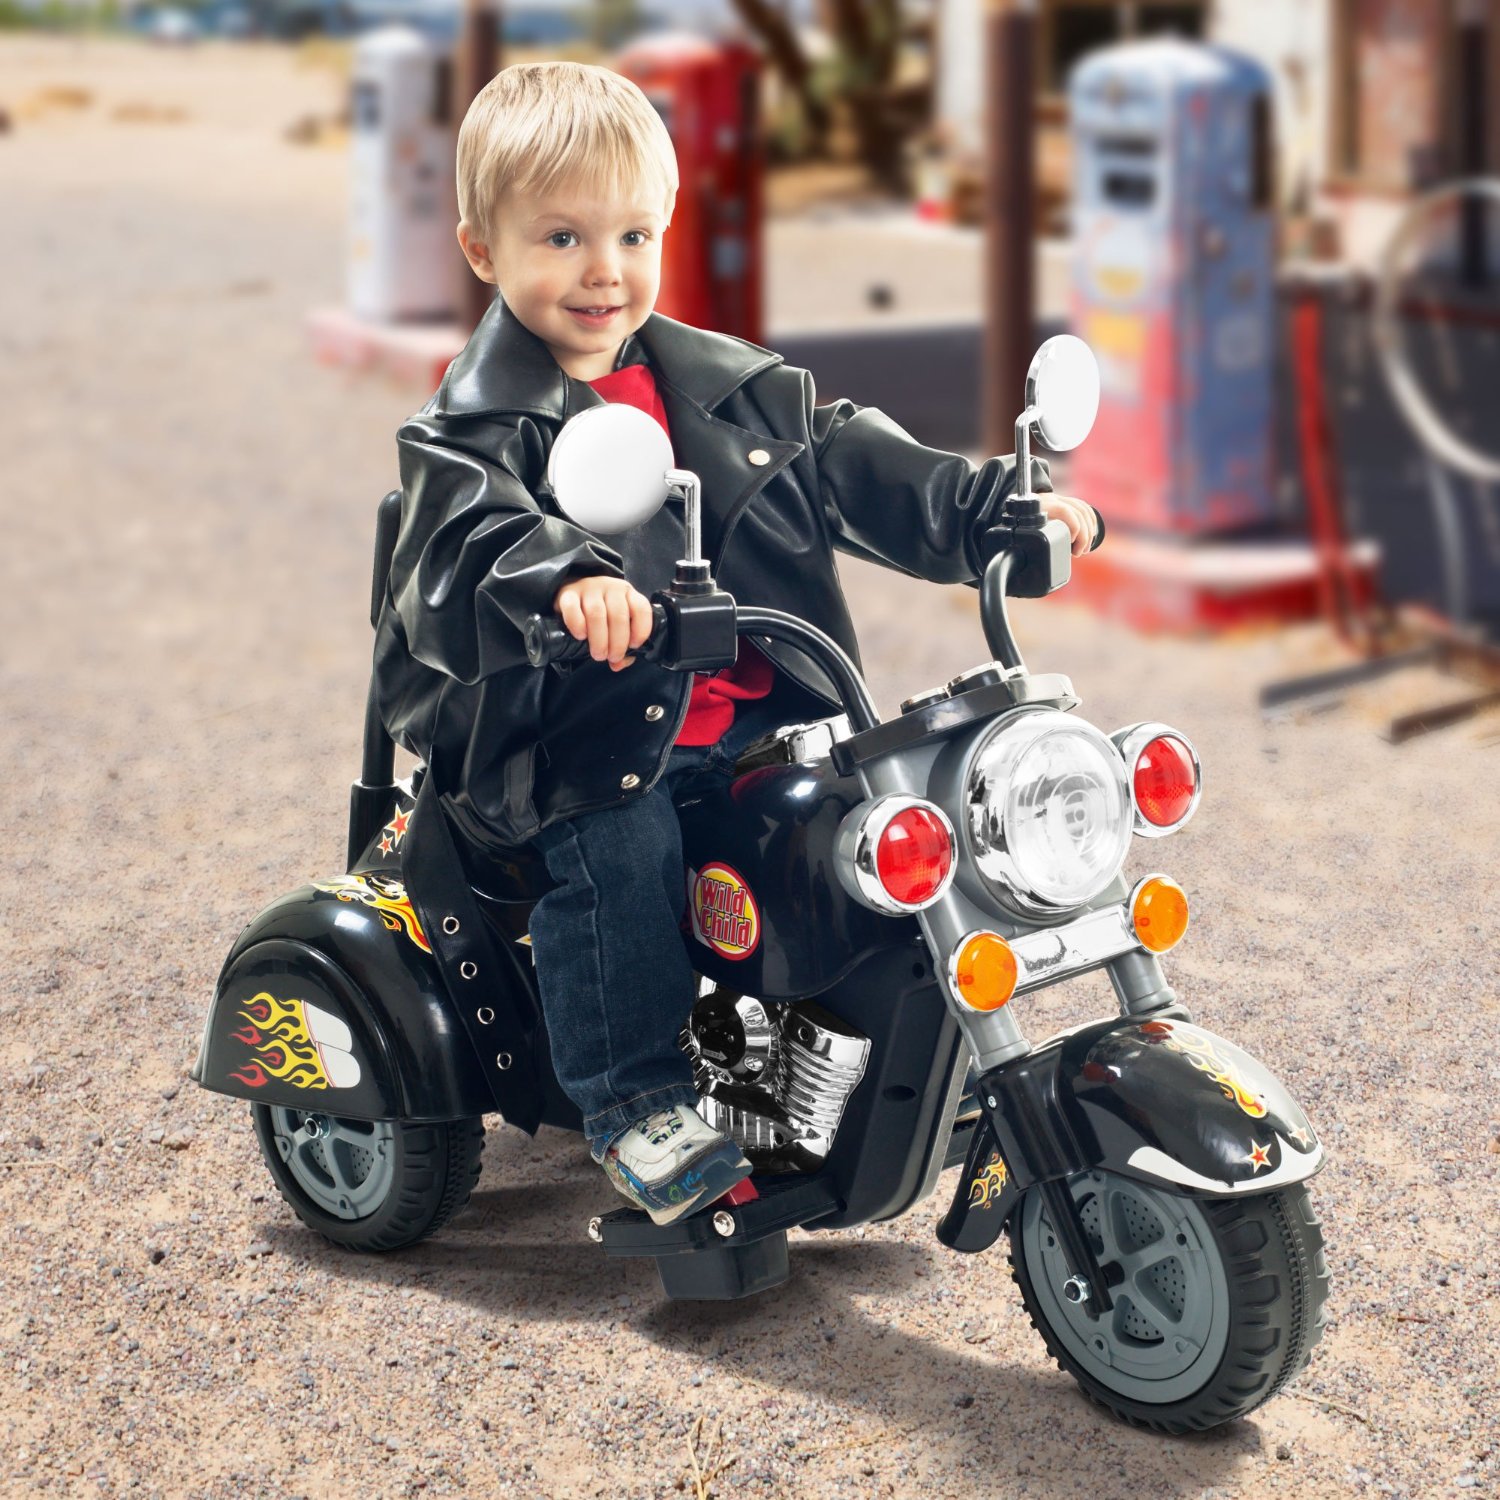 Lil' Rider Harley Style Wild Child Motorcycle - Black